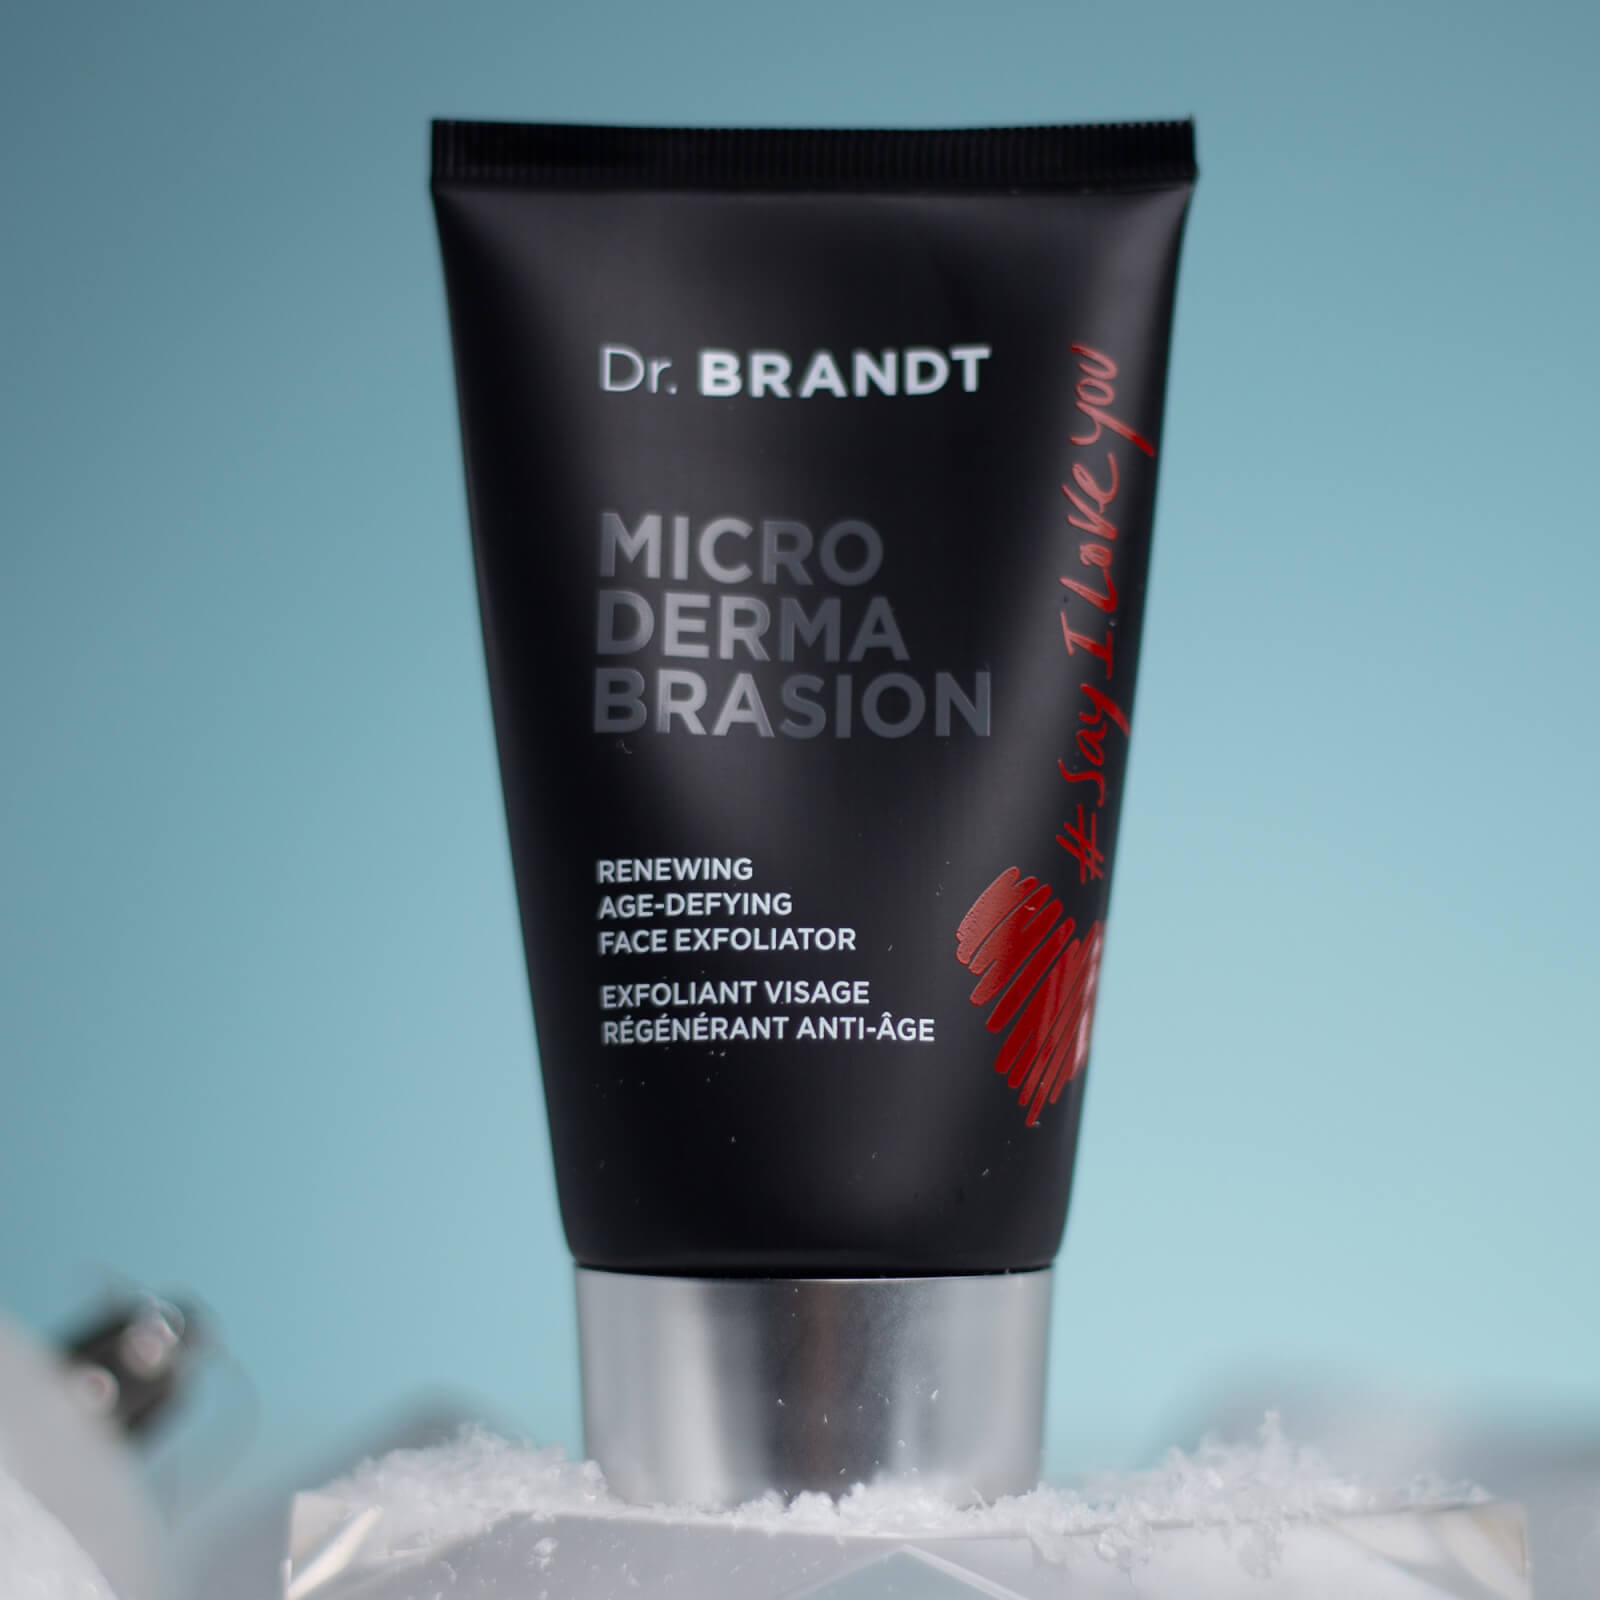 dr. brandt microdermabrasion renewing age-defying face exfoliator 60g